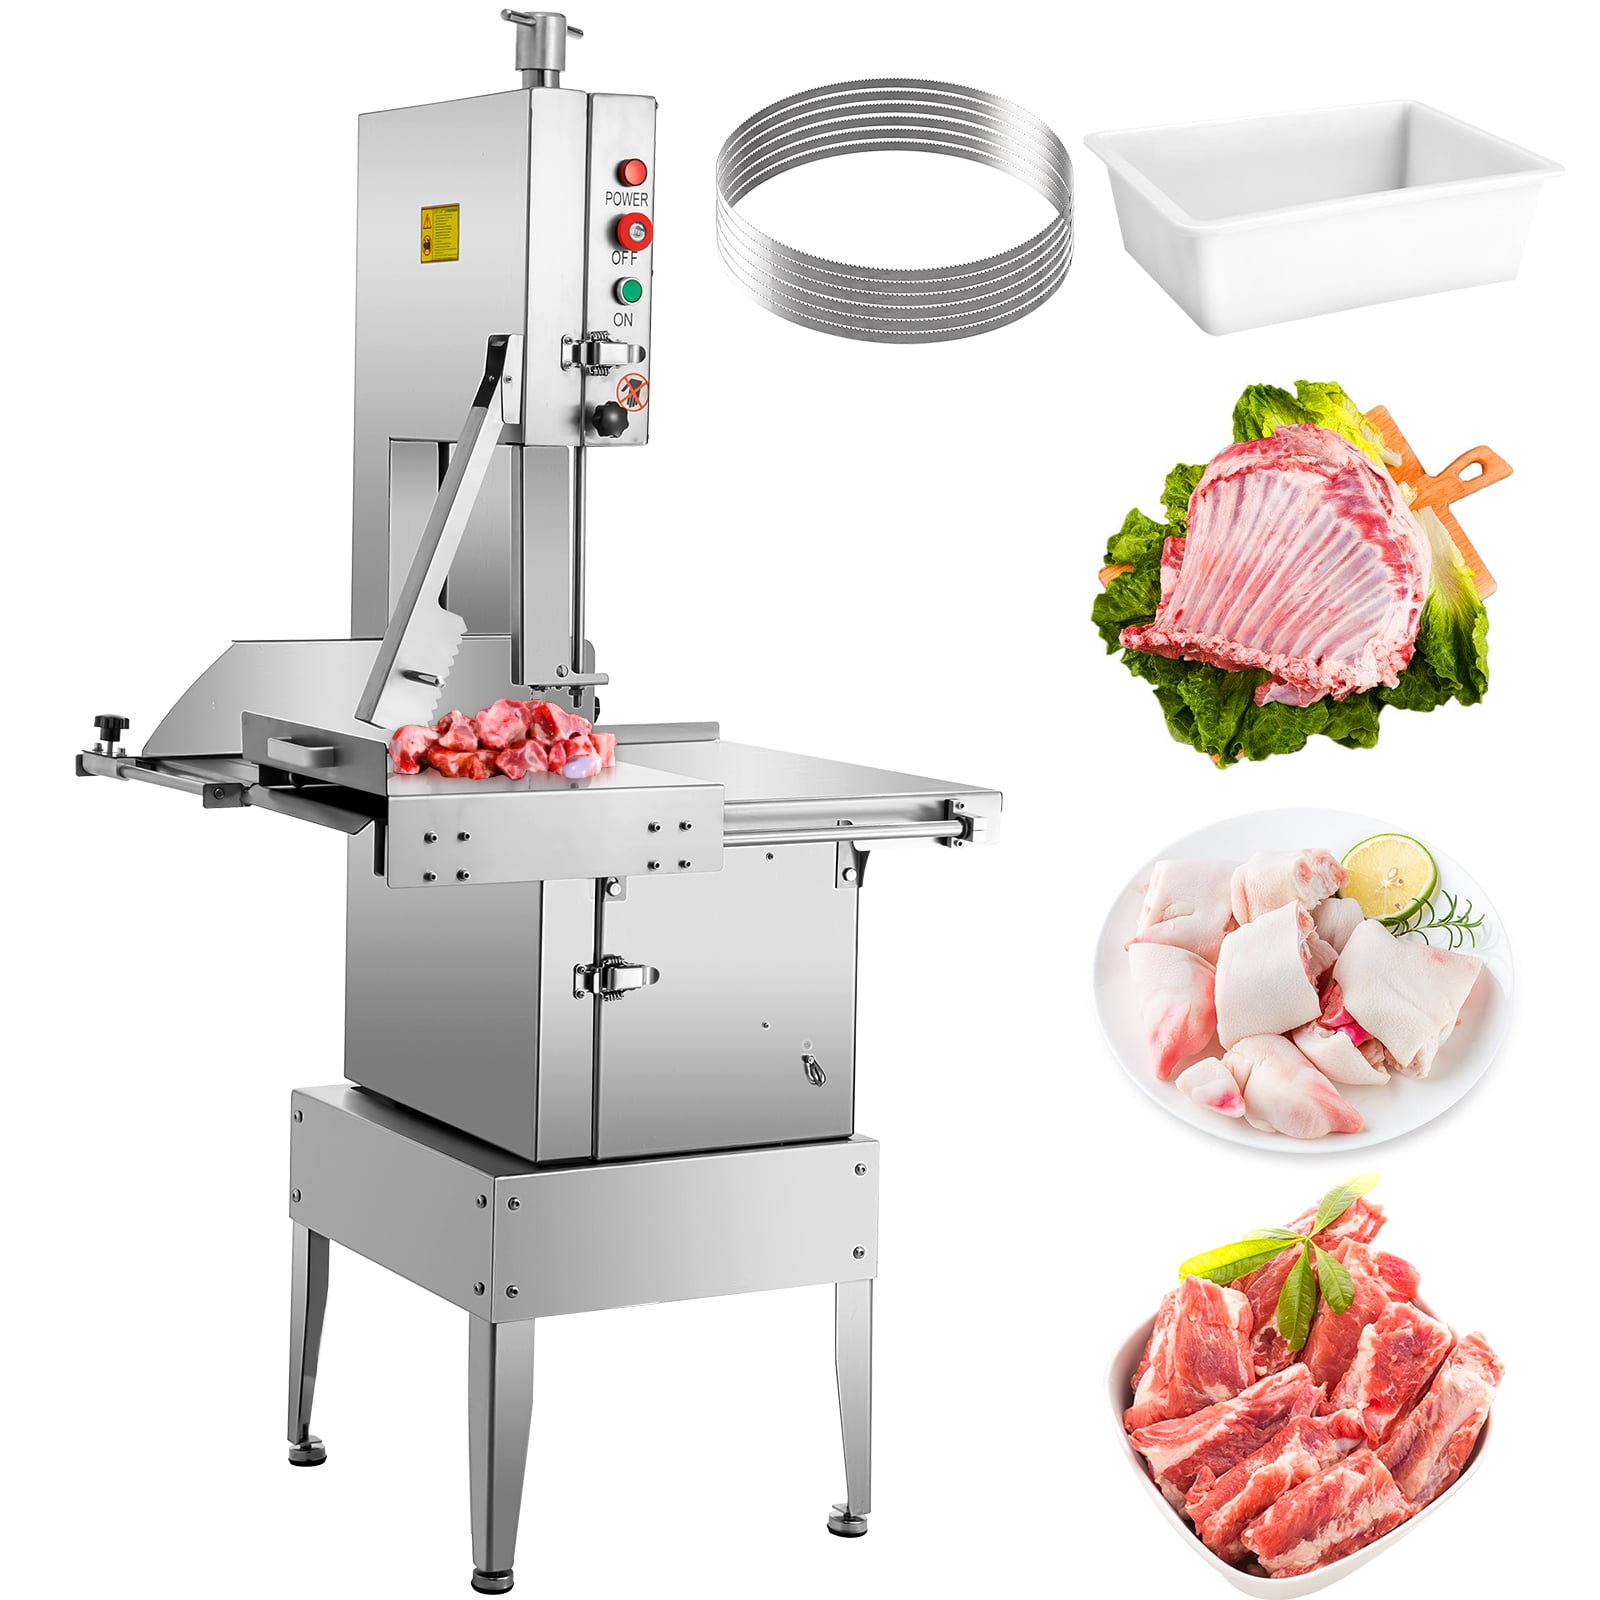 Commercial Meat Bone Cut Machine Stainless Steel Meat Processor Bone Saw Machine